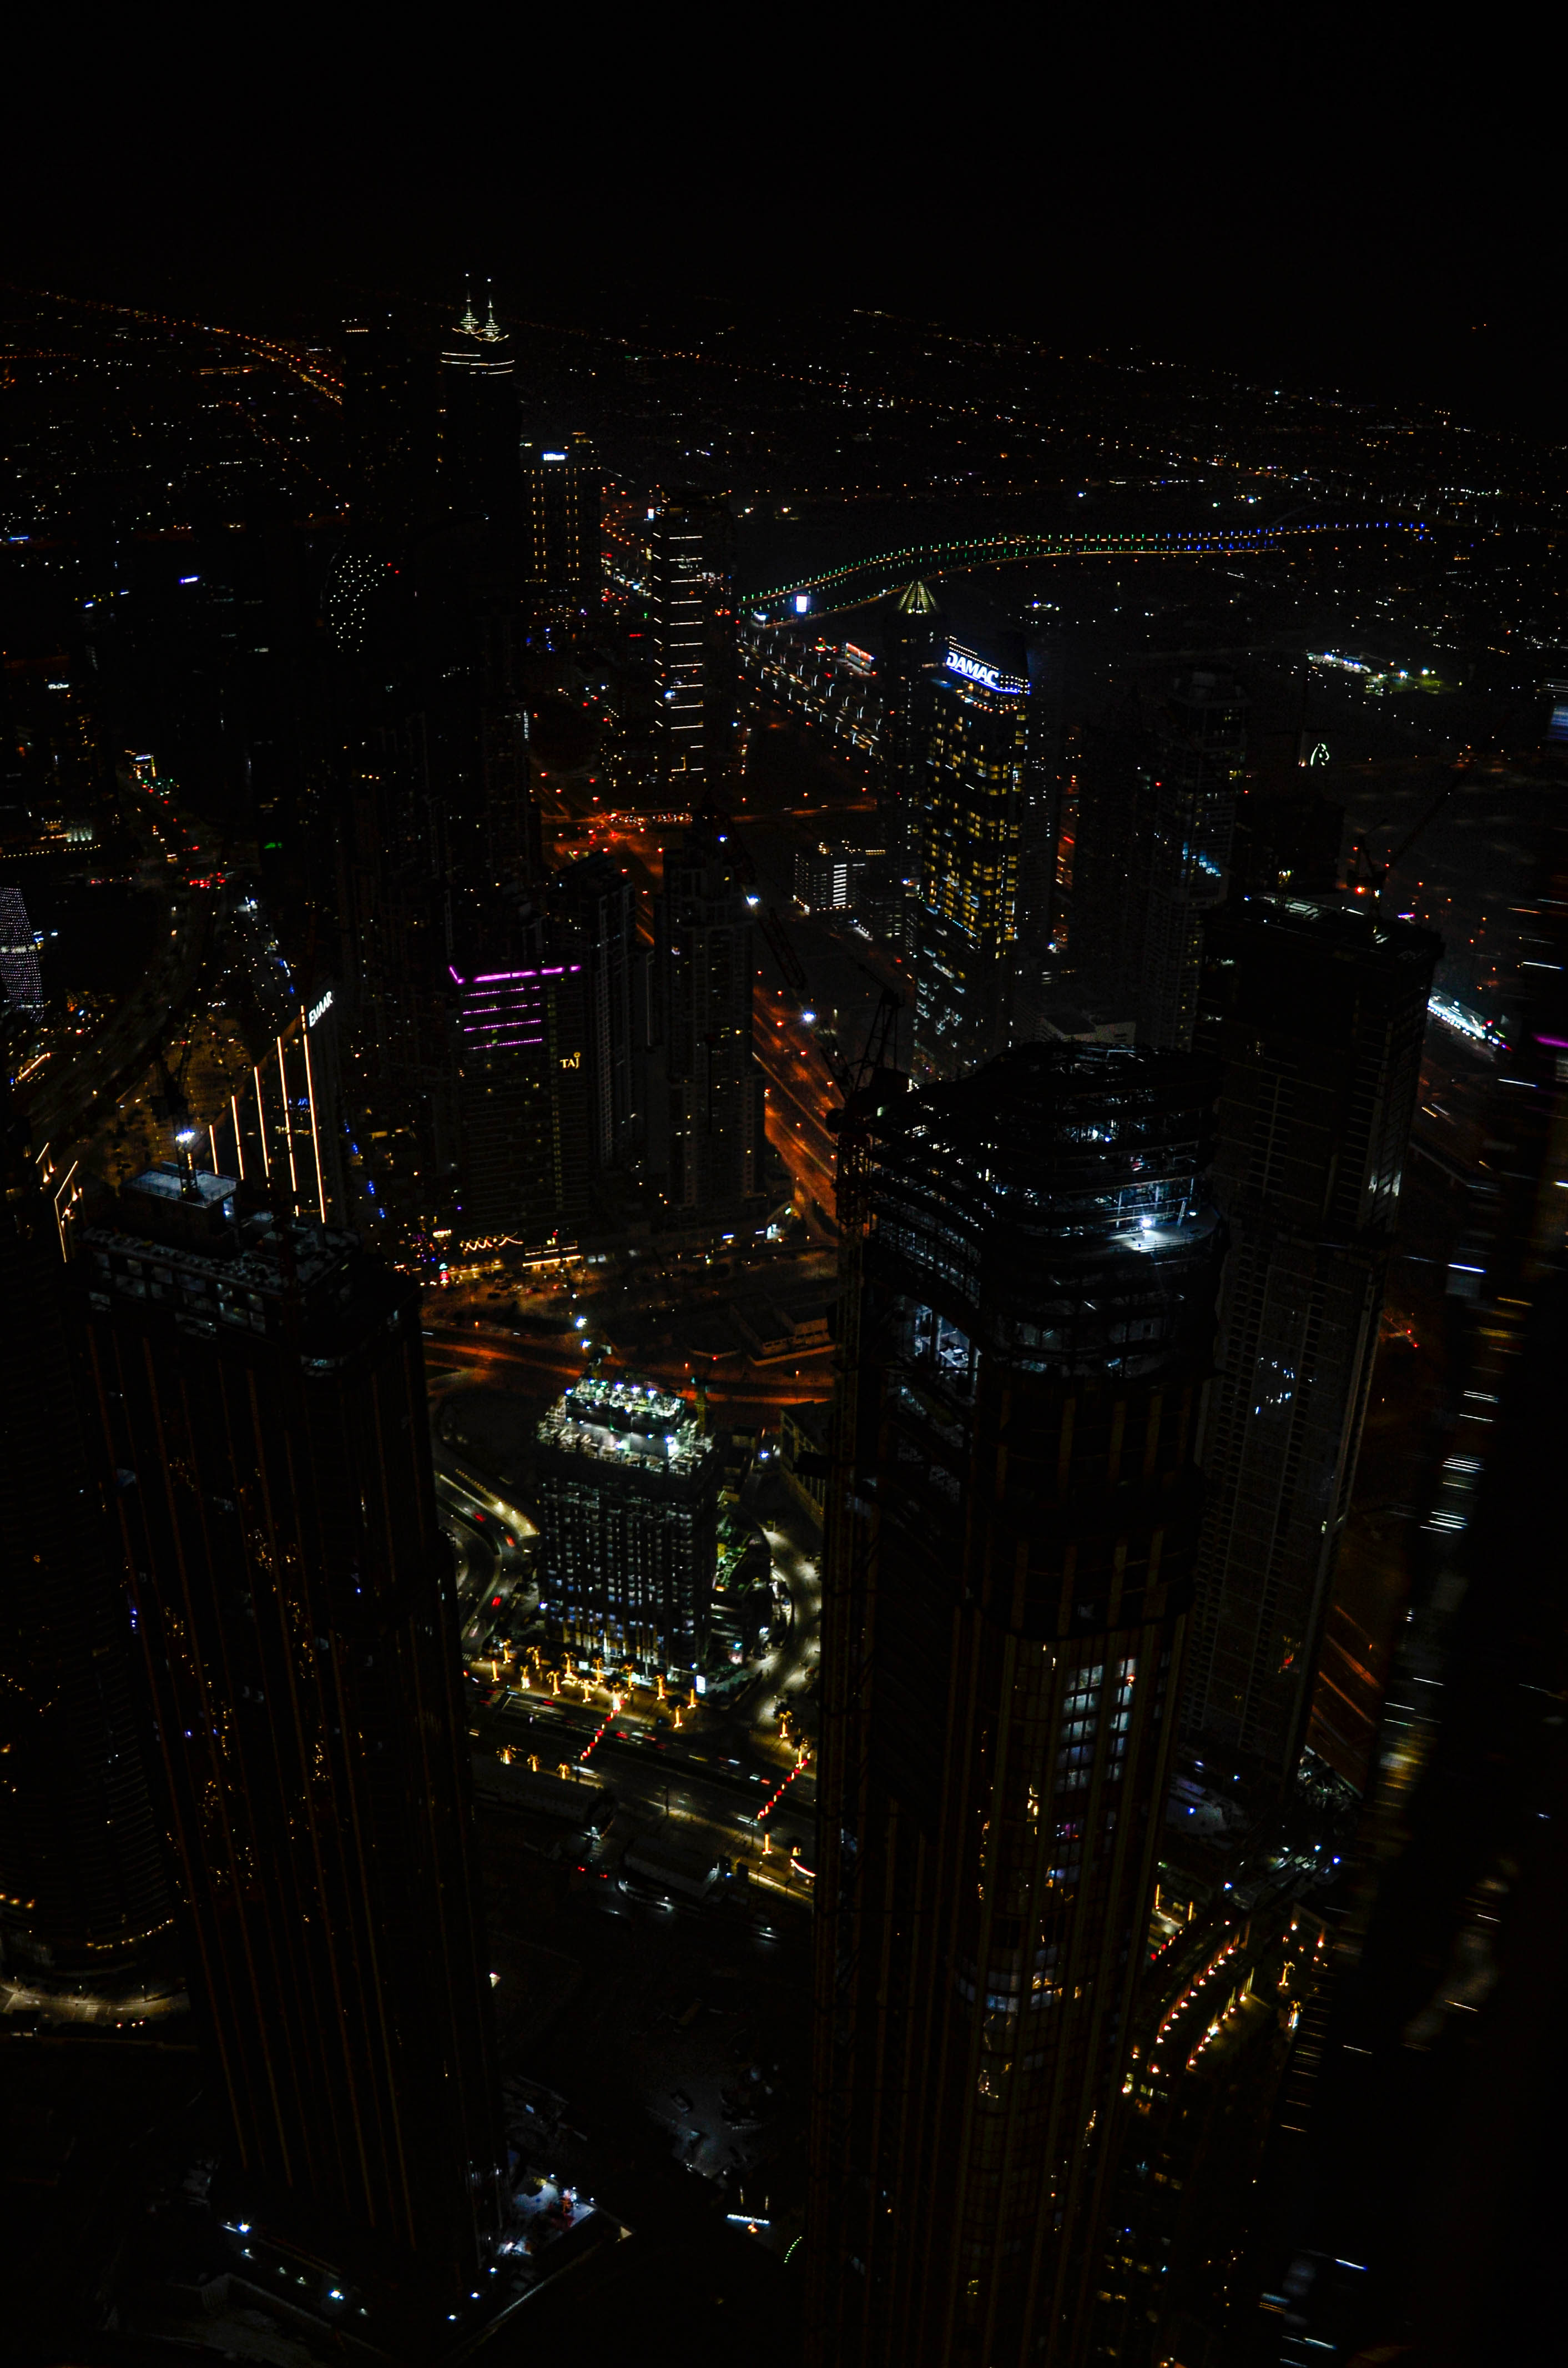 Photo Night City - Dubai from Above